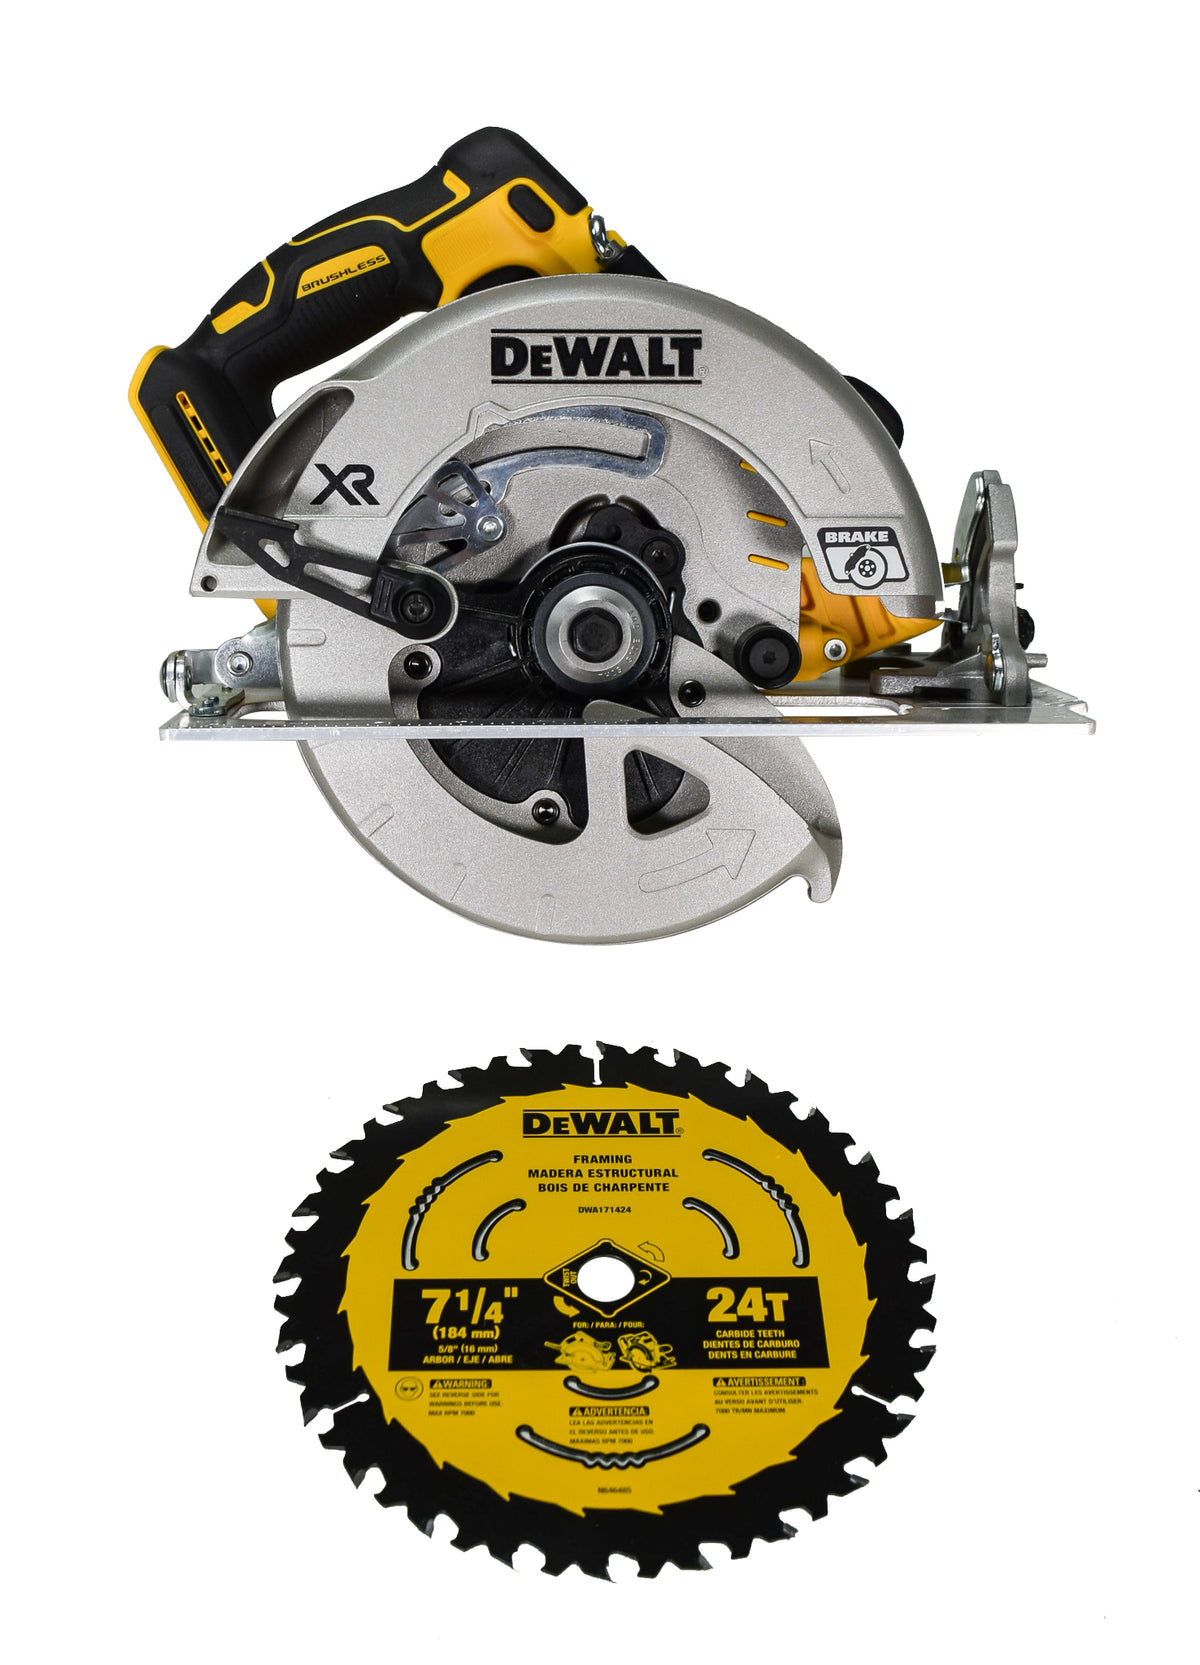 Dewalt DCS574B 20V MAX XR Brushless 7-1/4" Cordless Circular Saw (Bare Tool)